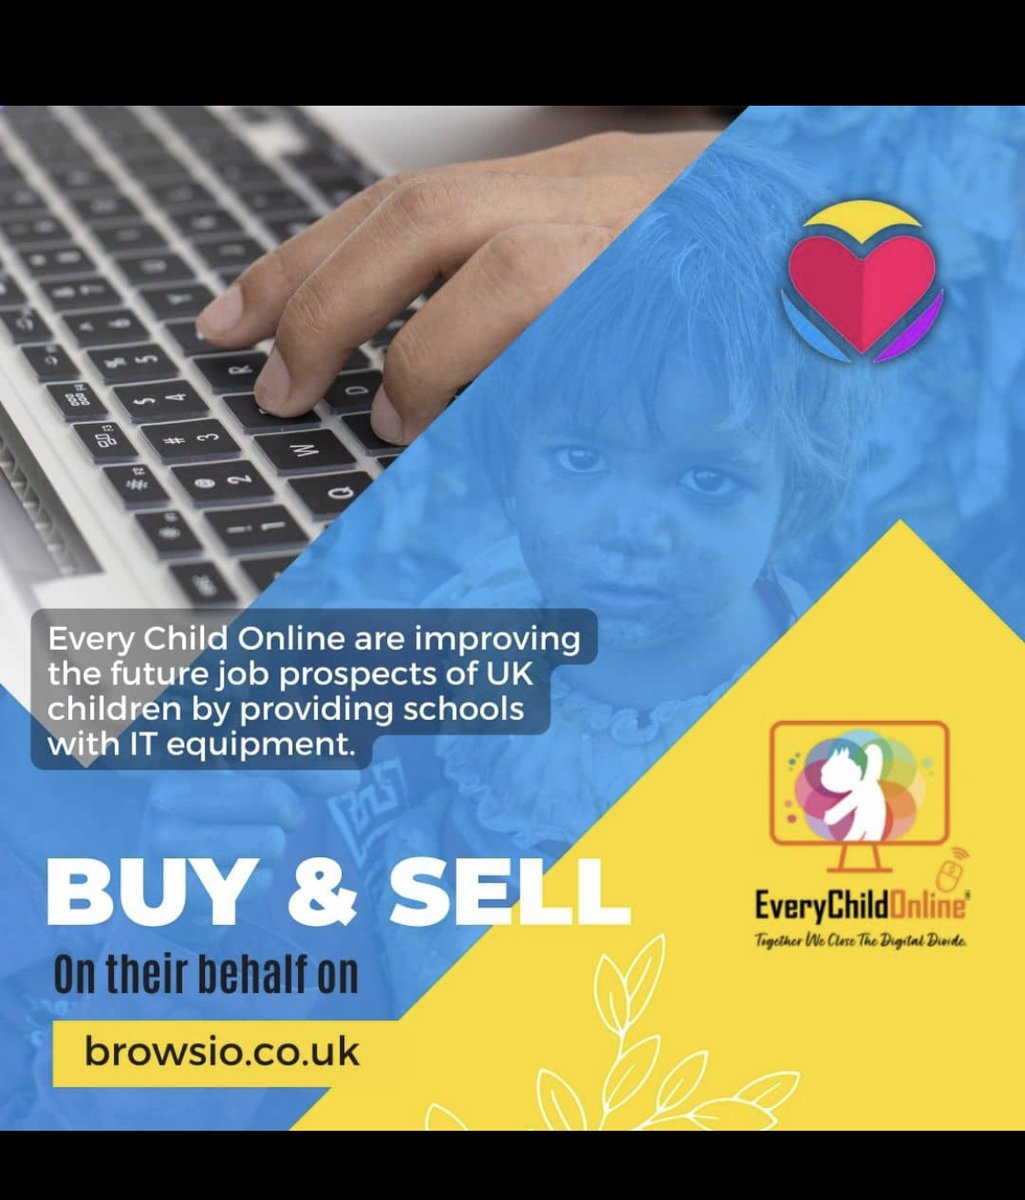 #browsio #charity #change #buyandsellonline #future #buyforgood #refurbishedlaptops support @EverychildUK by buying and selling on Browsio